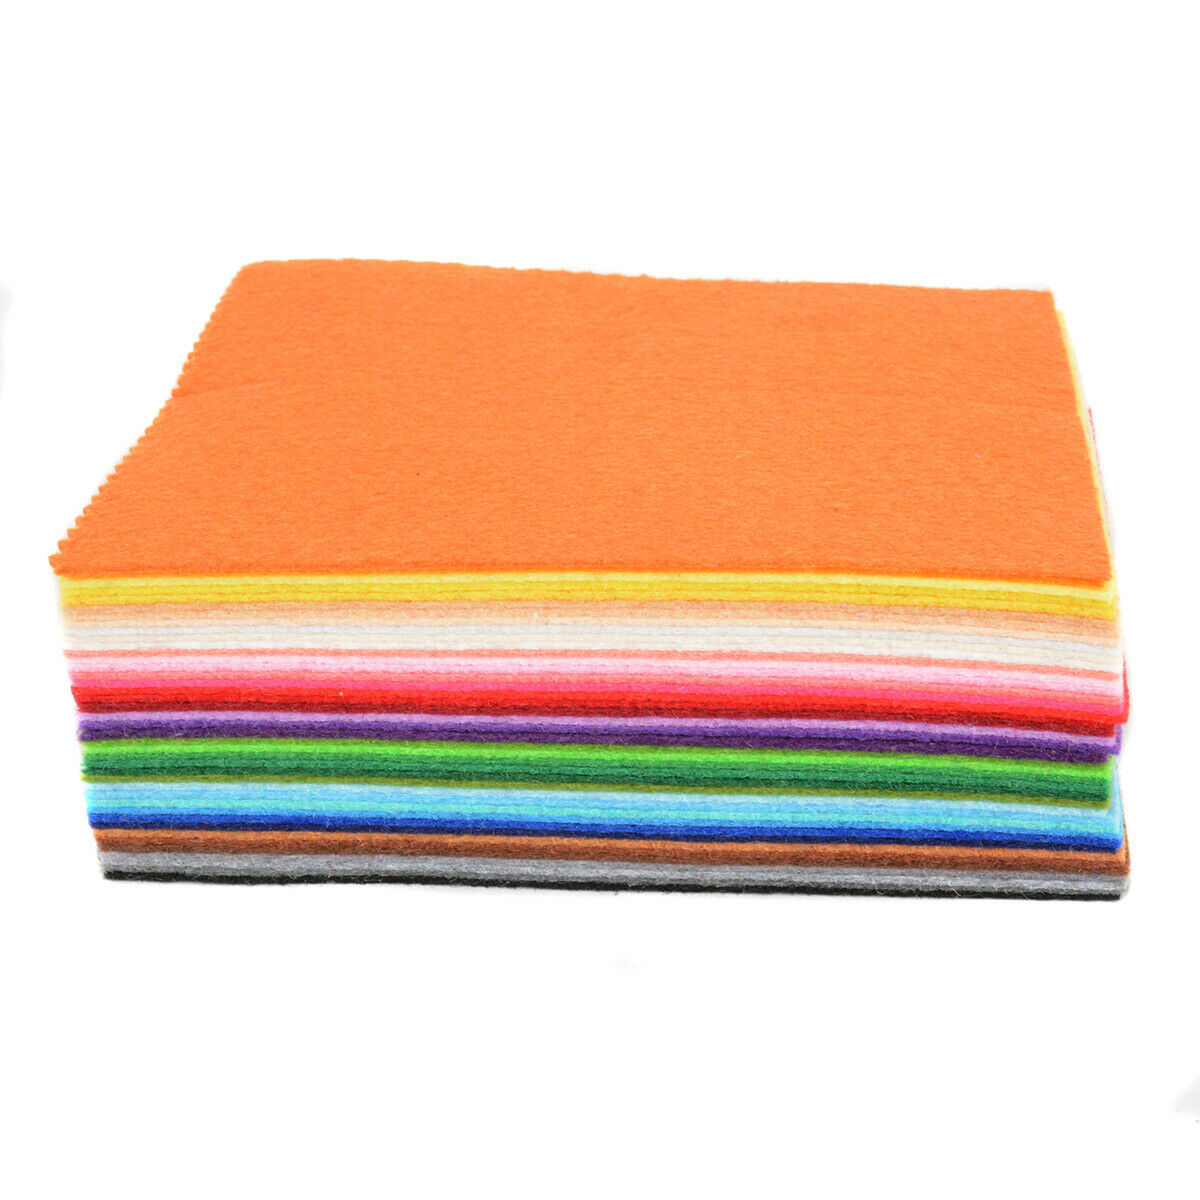 40pcs/set 10X15cm Soft Felt Fabric Square Sheet Assorted Color for DIY Crafts